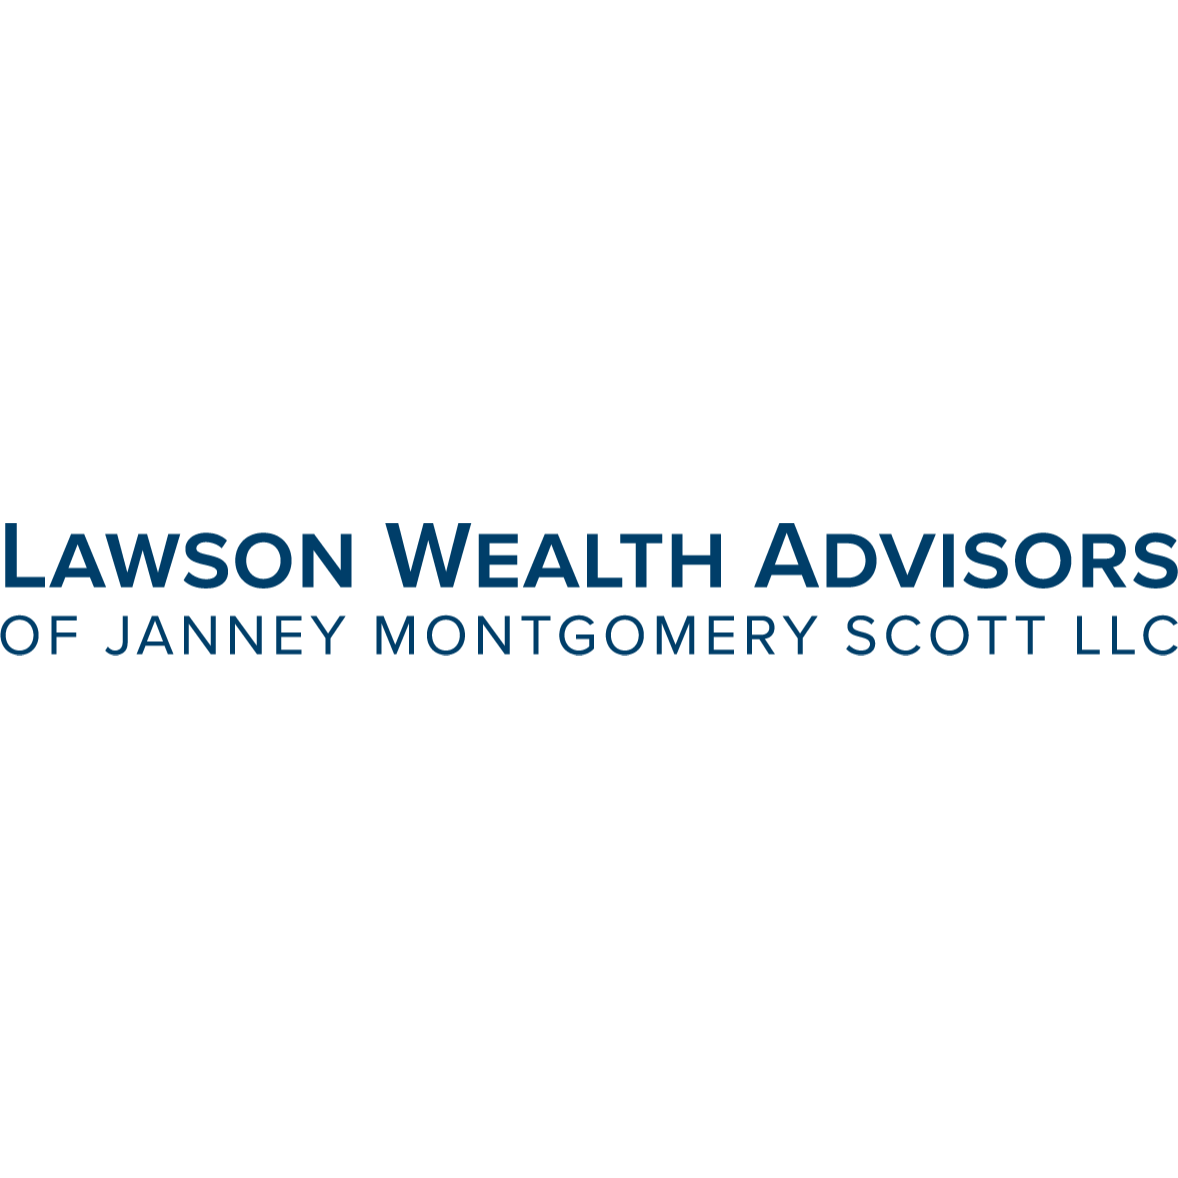 Lawson Wealth Advisors of Janney Montgomery Scott